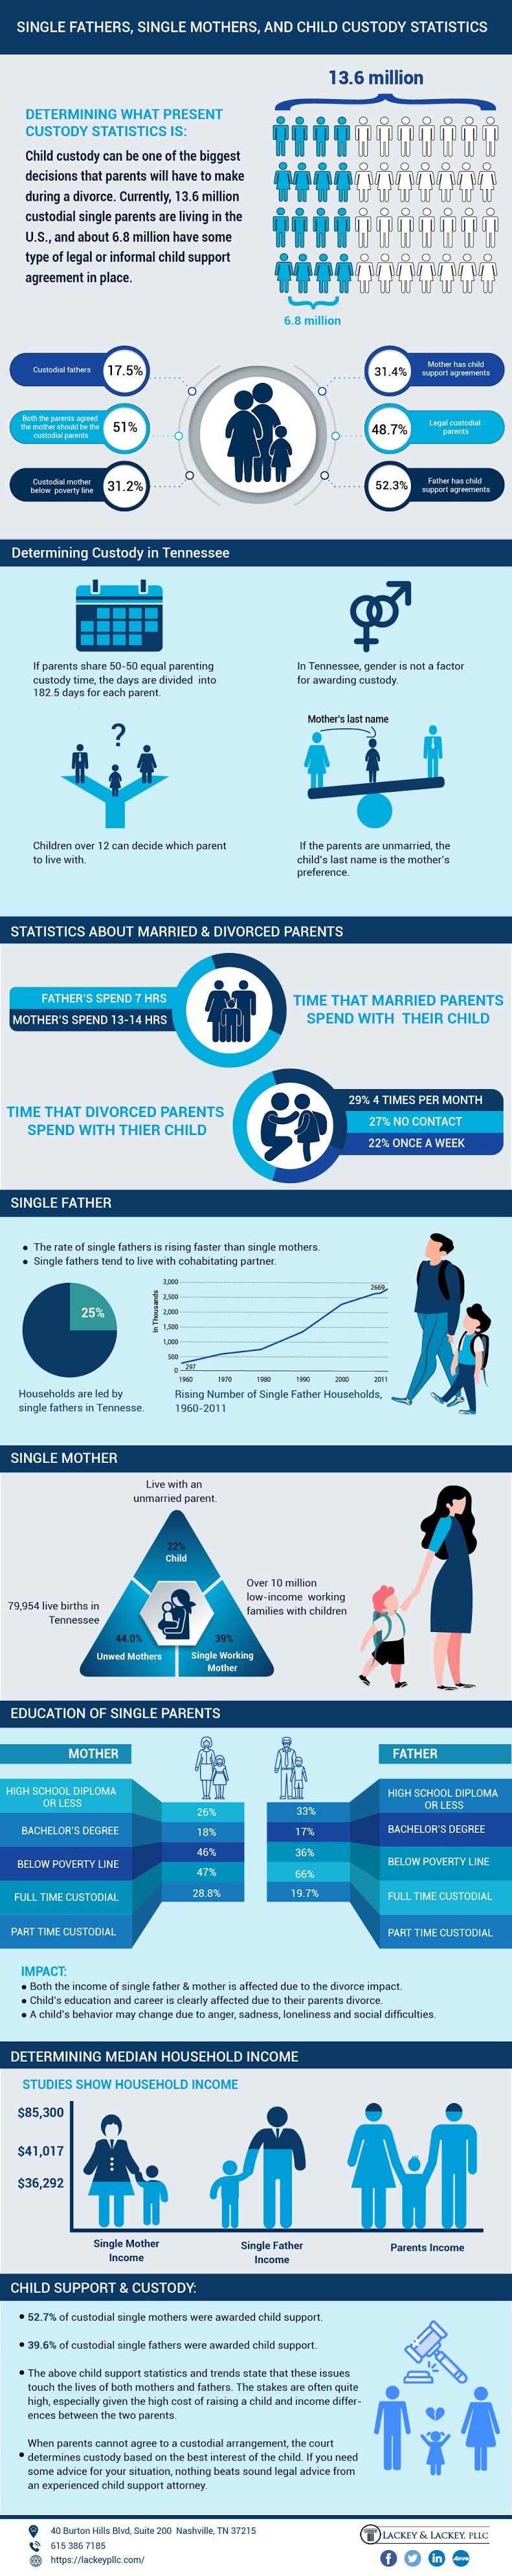 child custody statistics